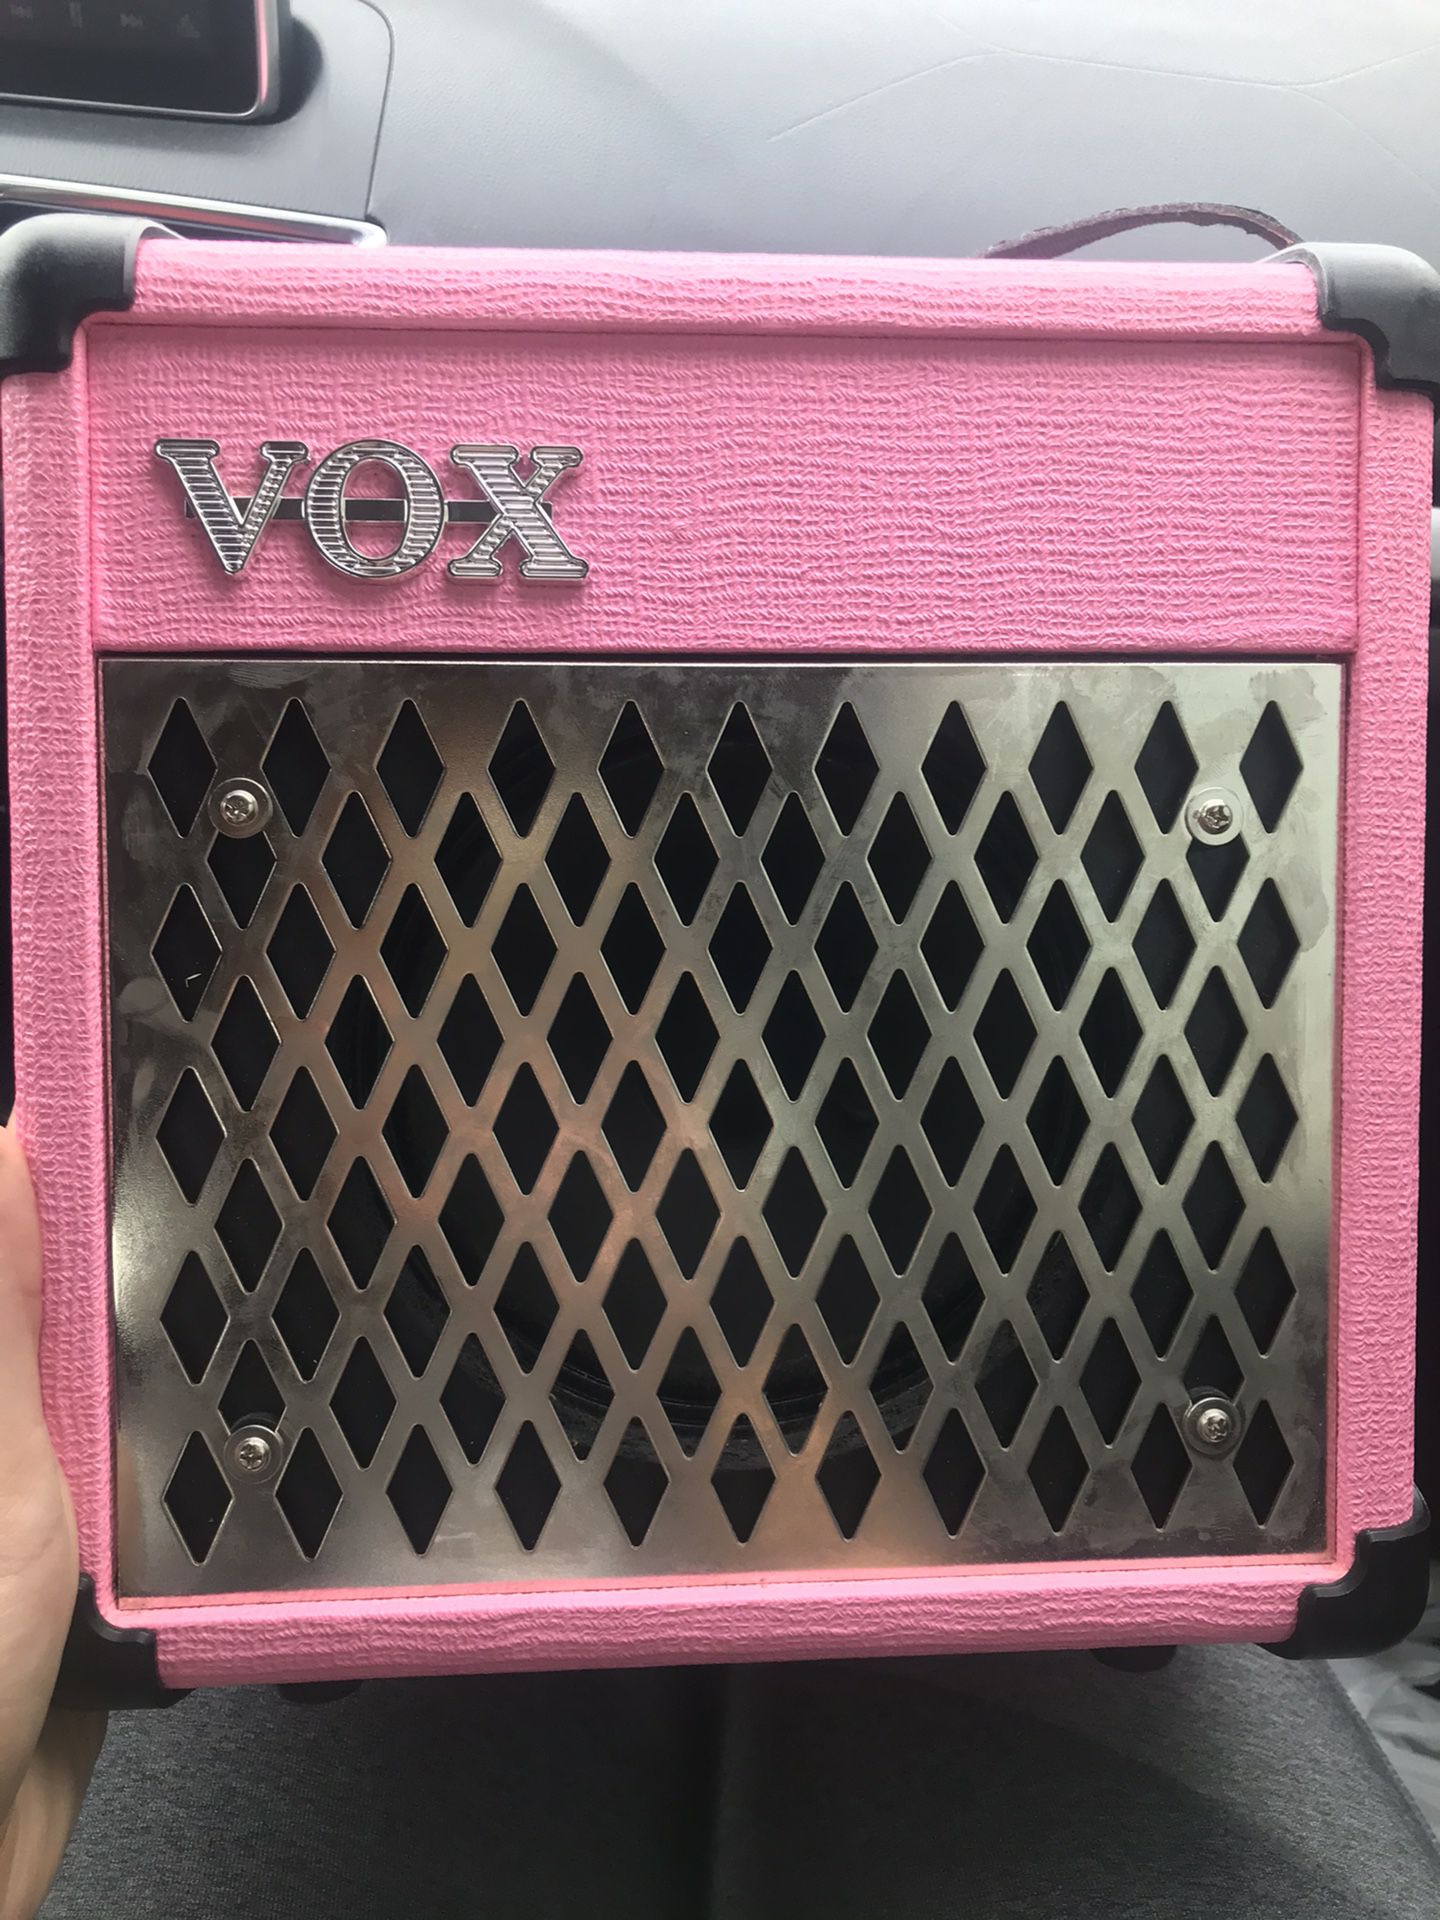 Pink Vox DA5 Guitar Amp mini portable